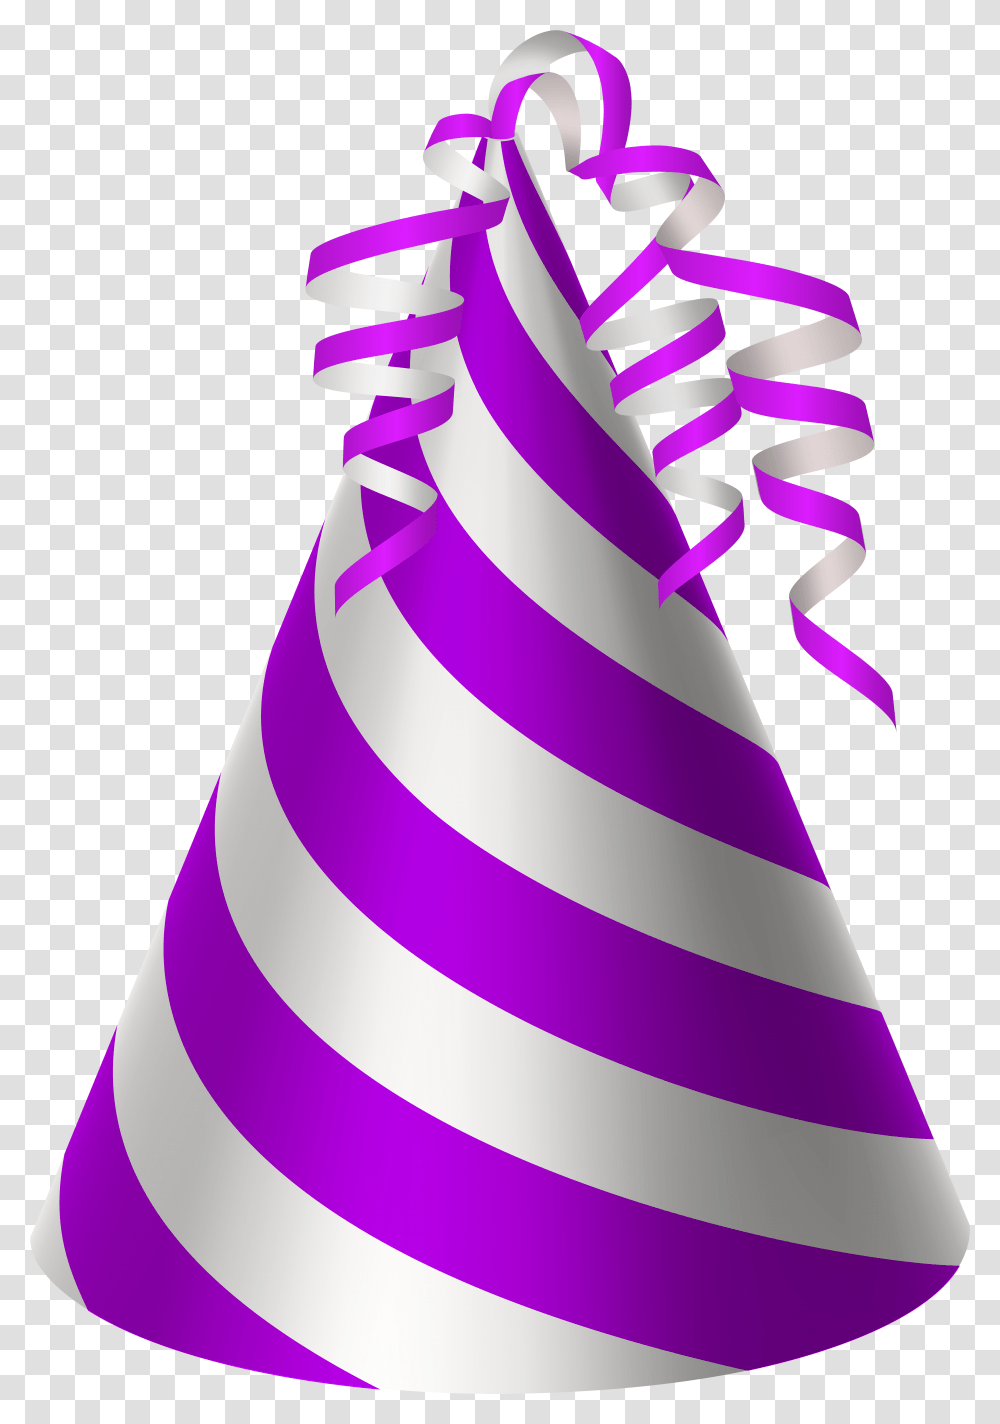 Birthday Hat Clipart Purple Free Party Hat, Apparel, Wedding Cake, Dessert Transparent Png